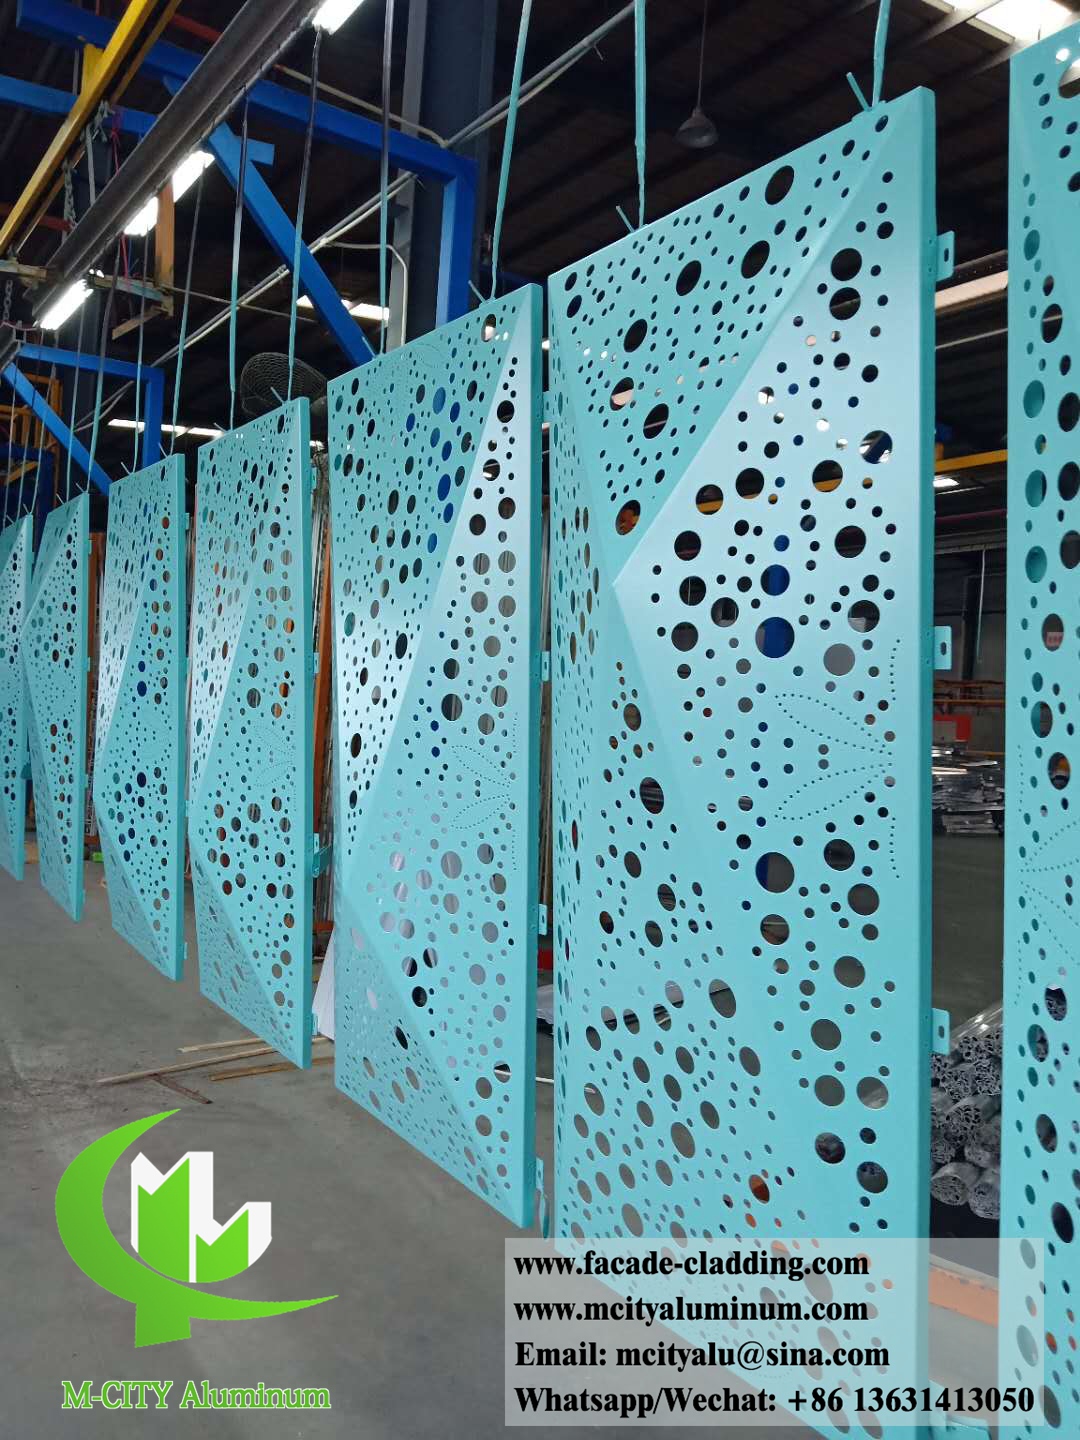 3D metal facades design 3mm perforated aluminum screen for facade cladding decoration 